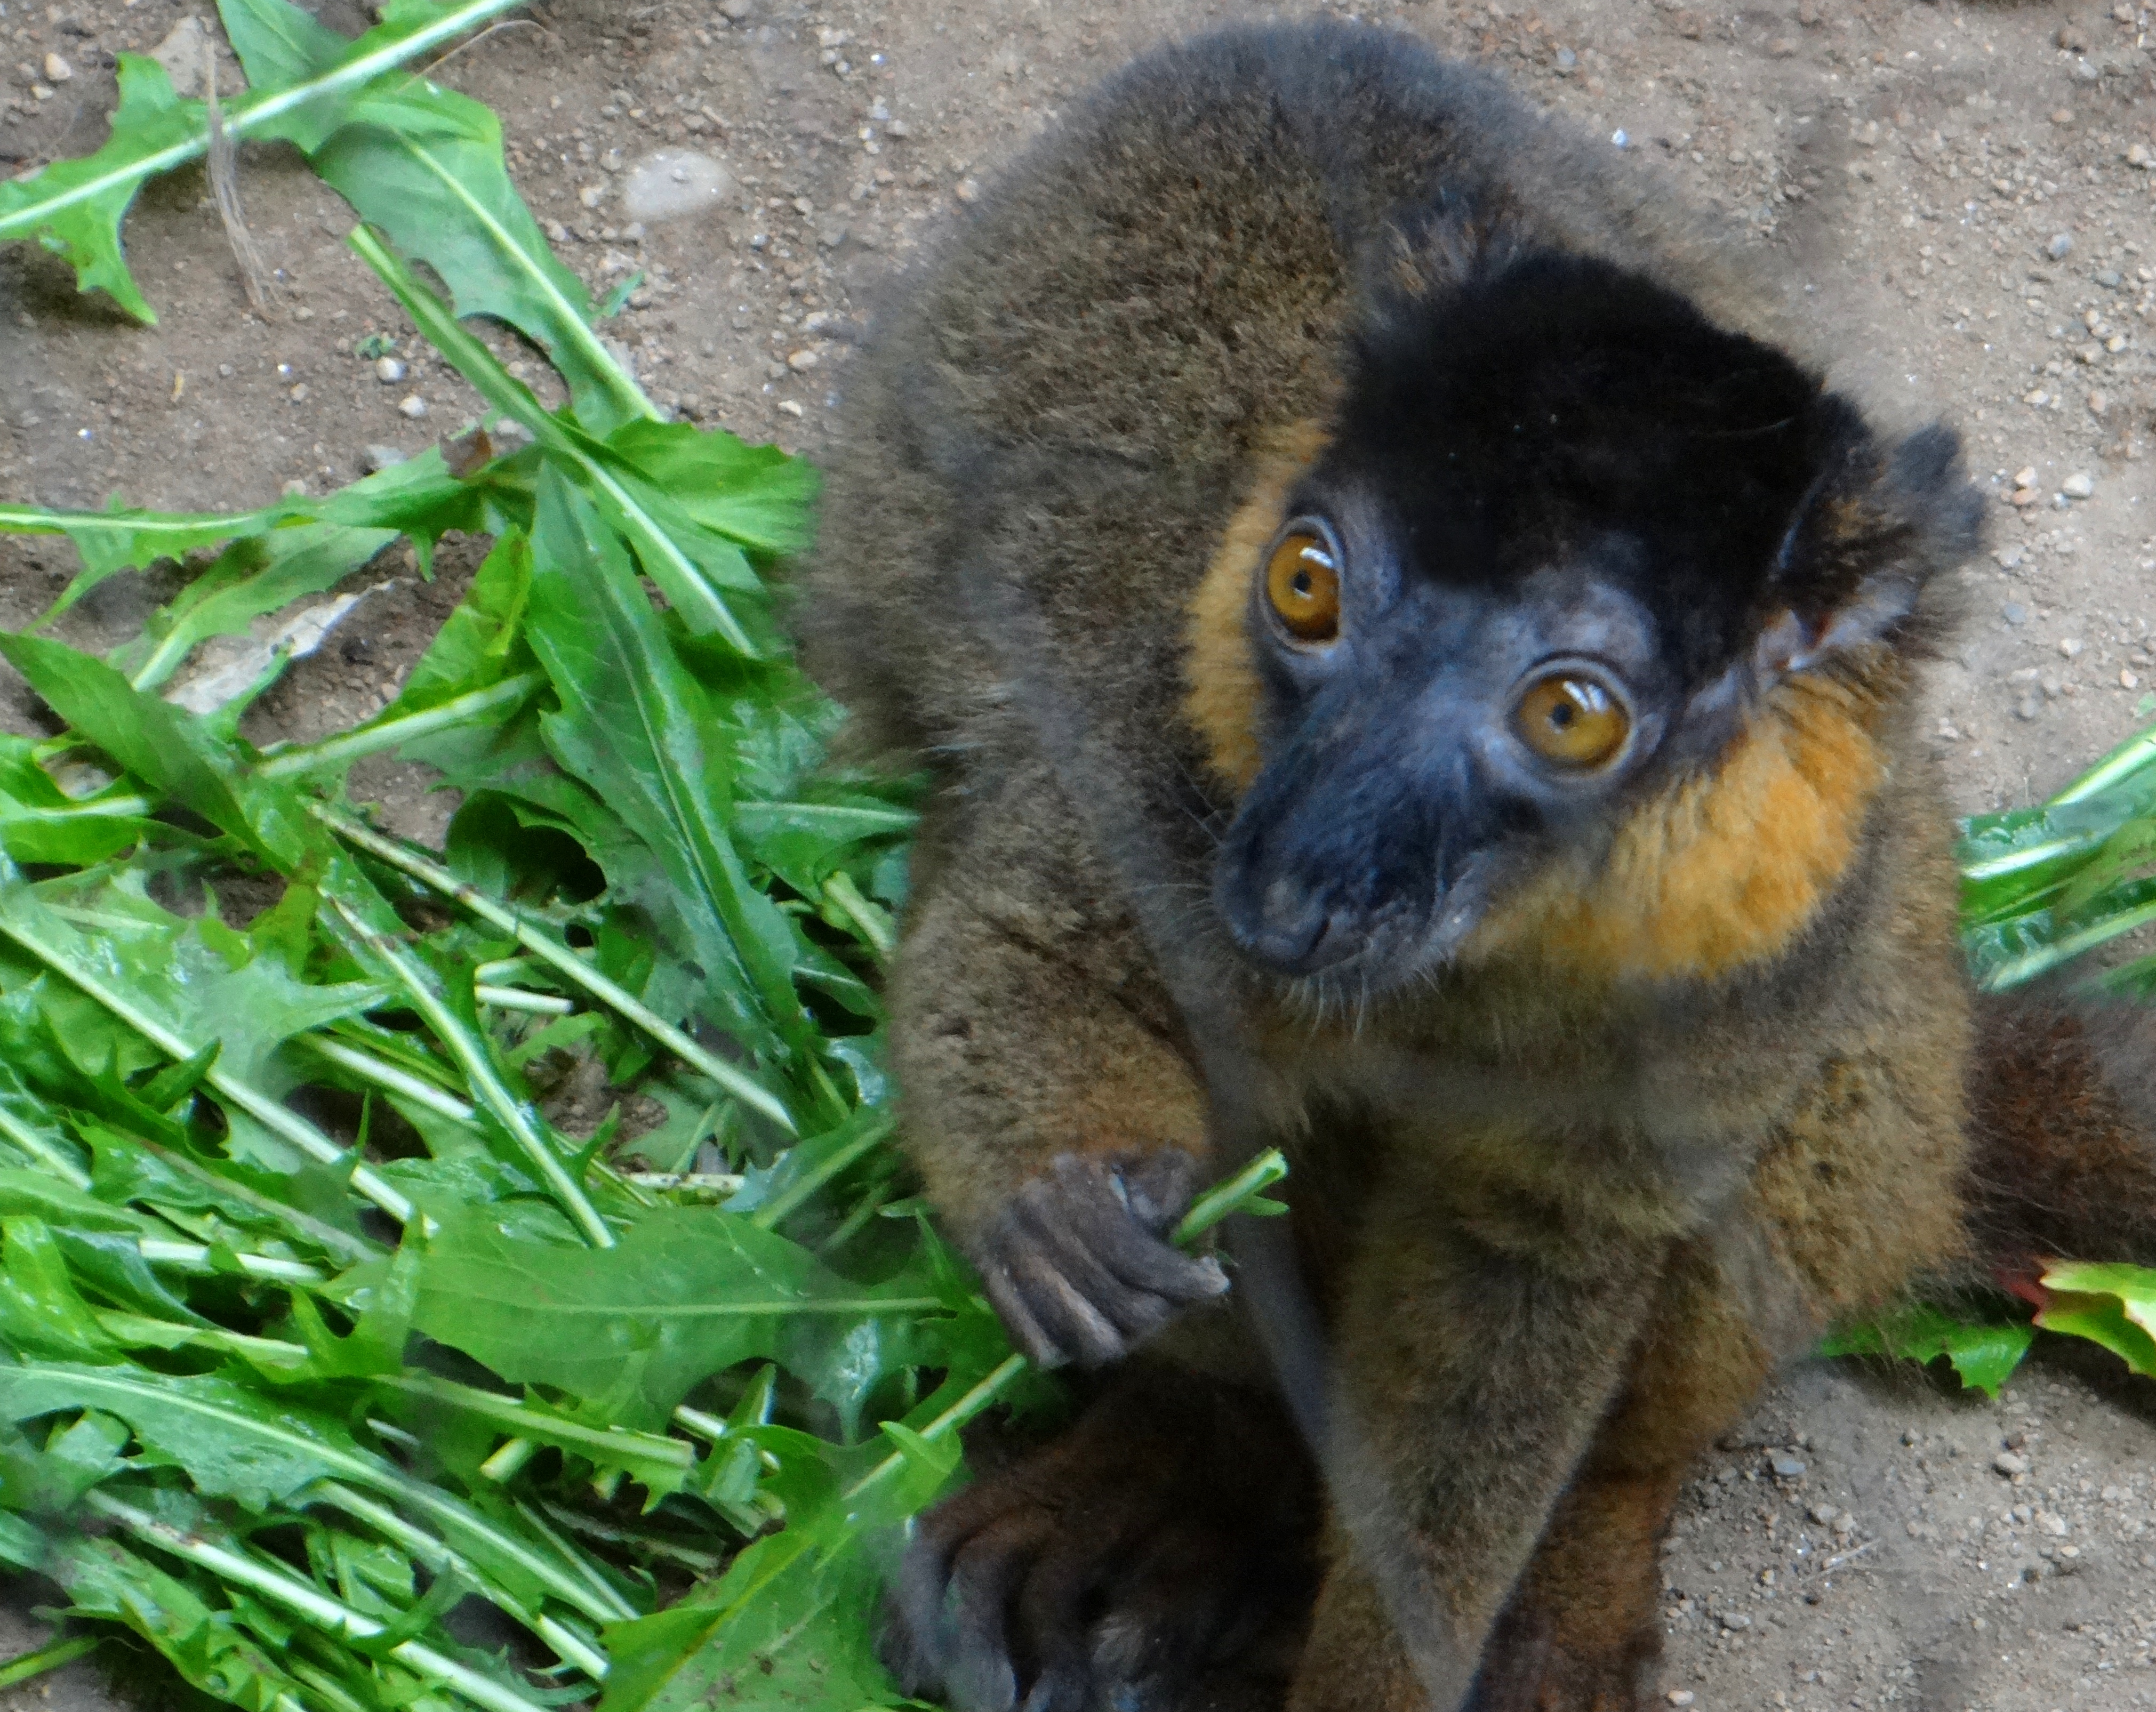 Collared Lemur male eating